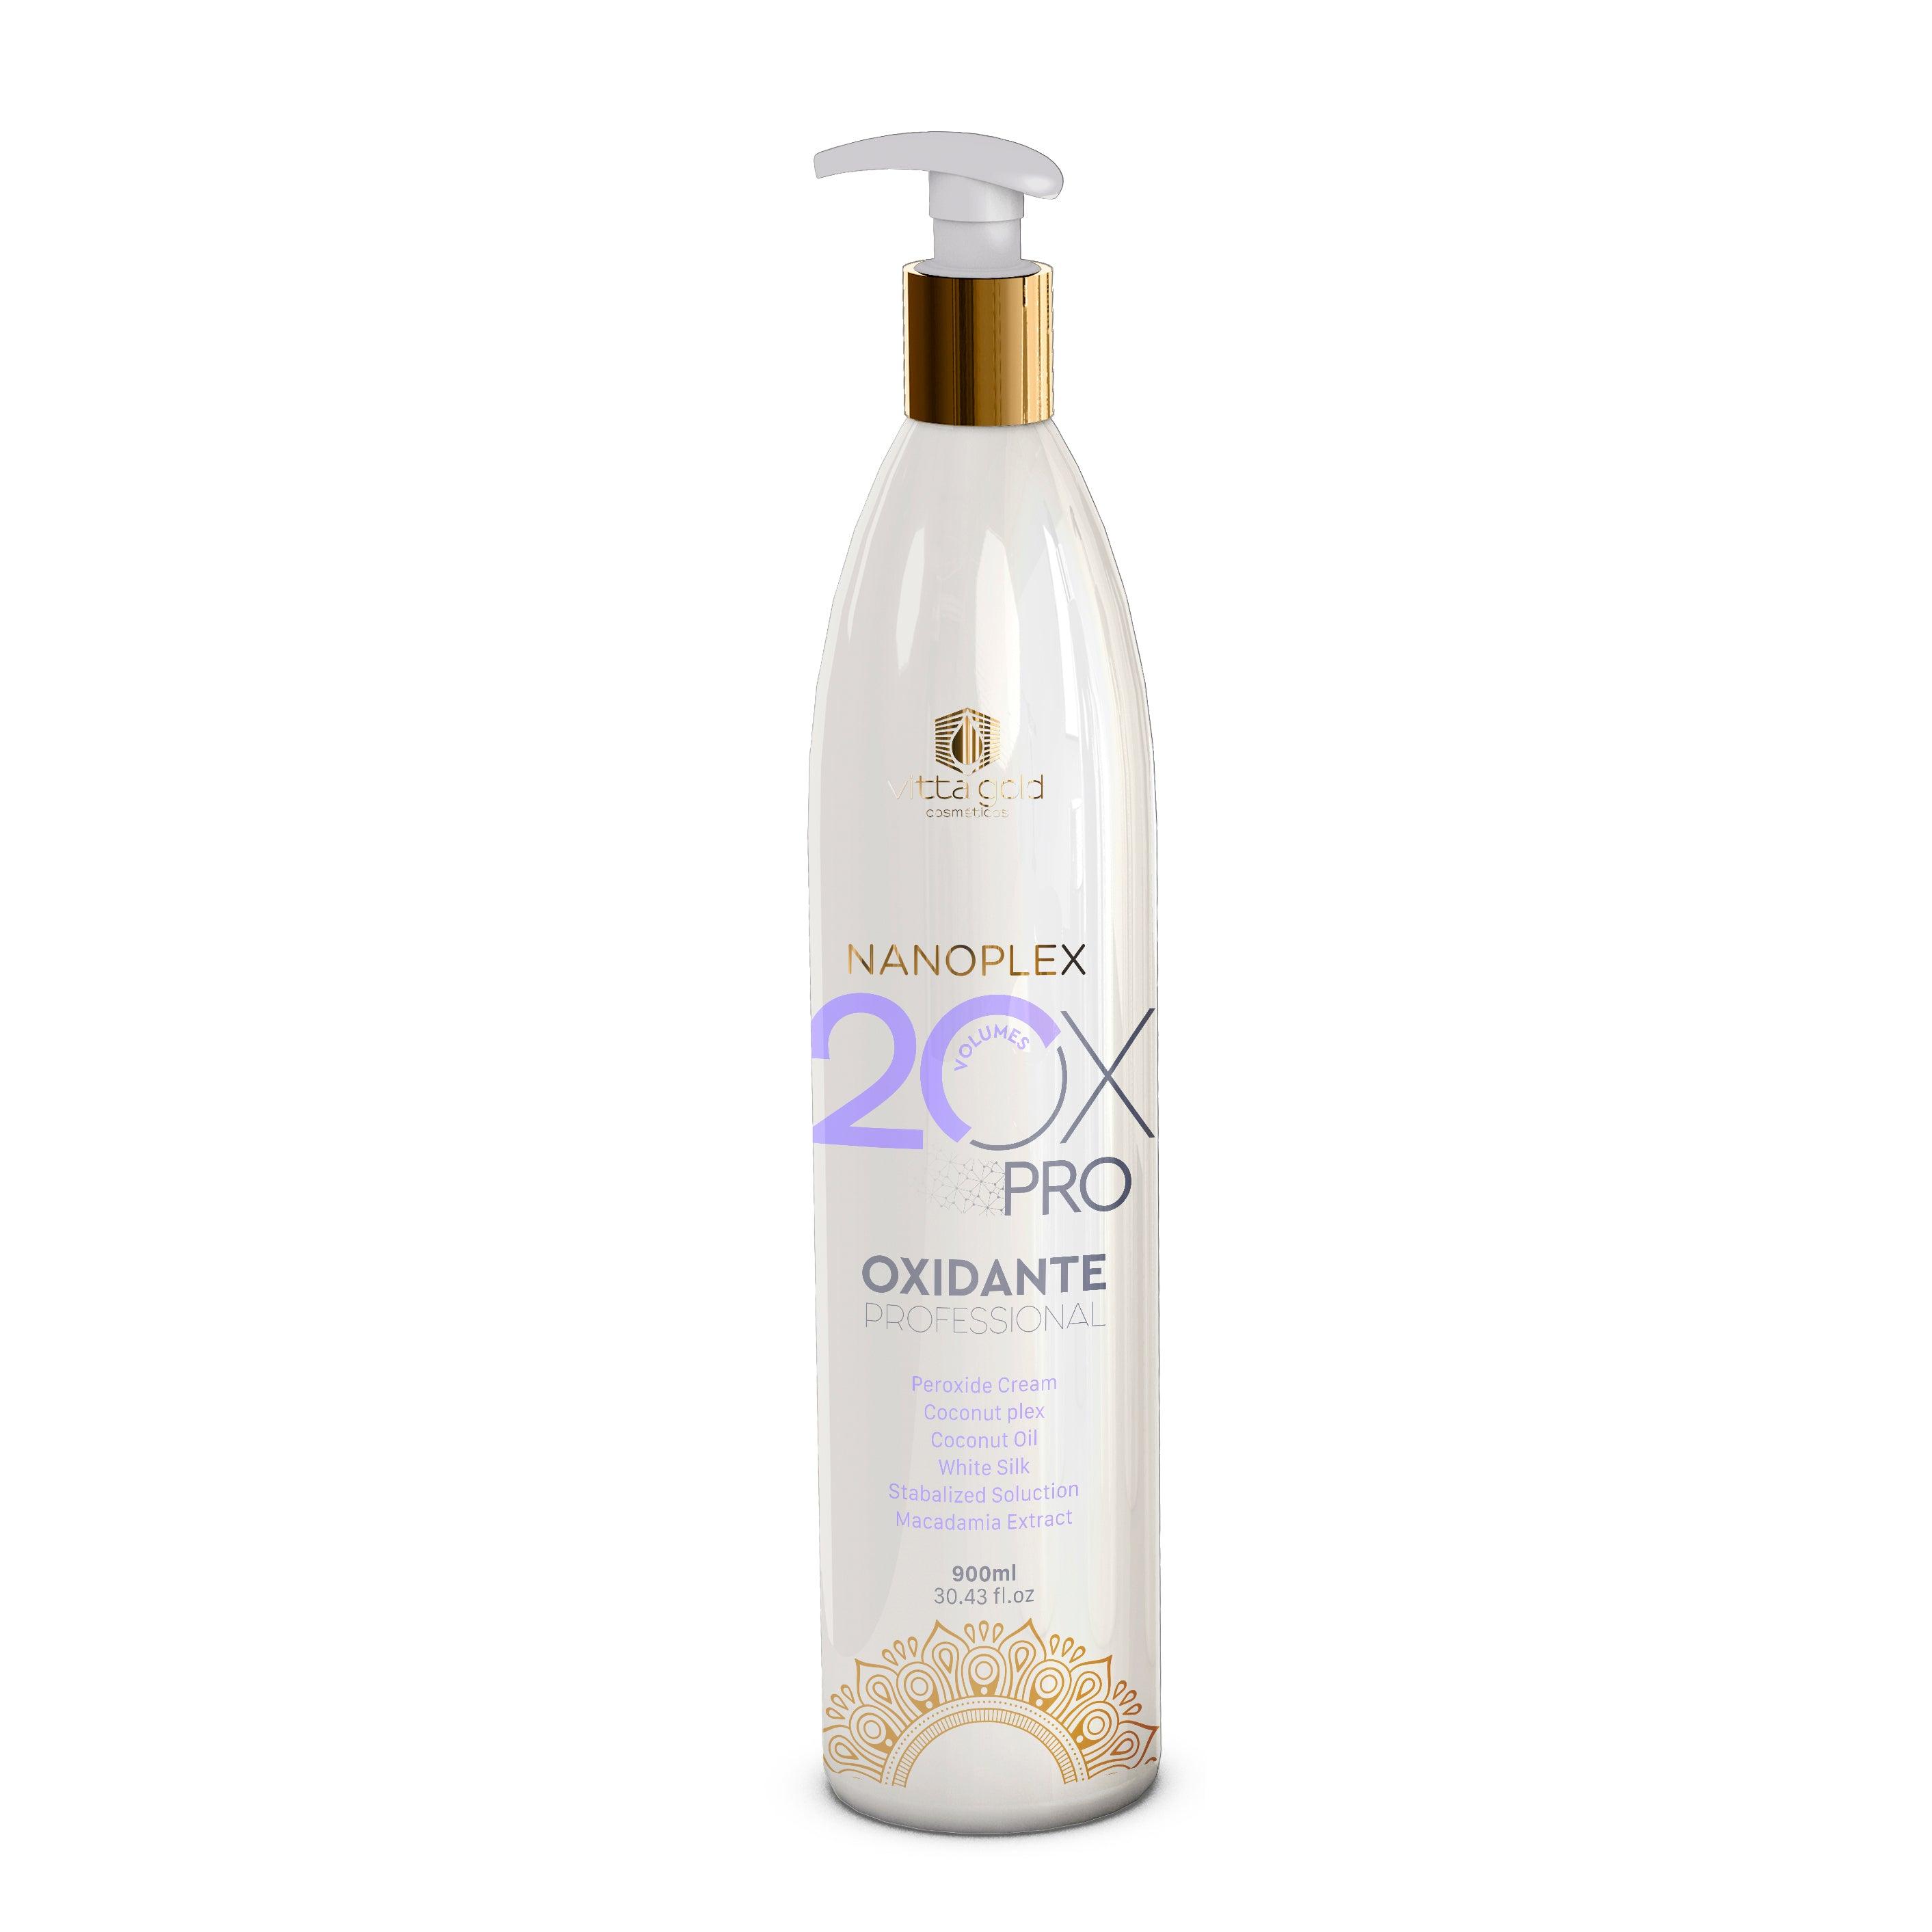 Nanoplex Peroxide Cream OX - 20vol. Professional Hair Oxidizing-Proxide Cream-Vitta Gold